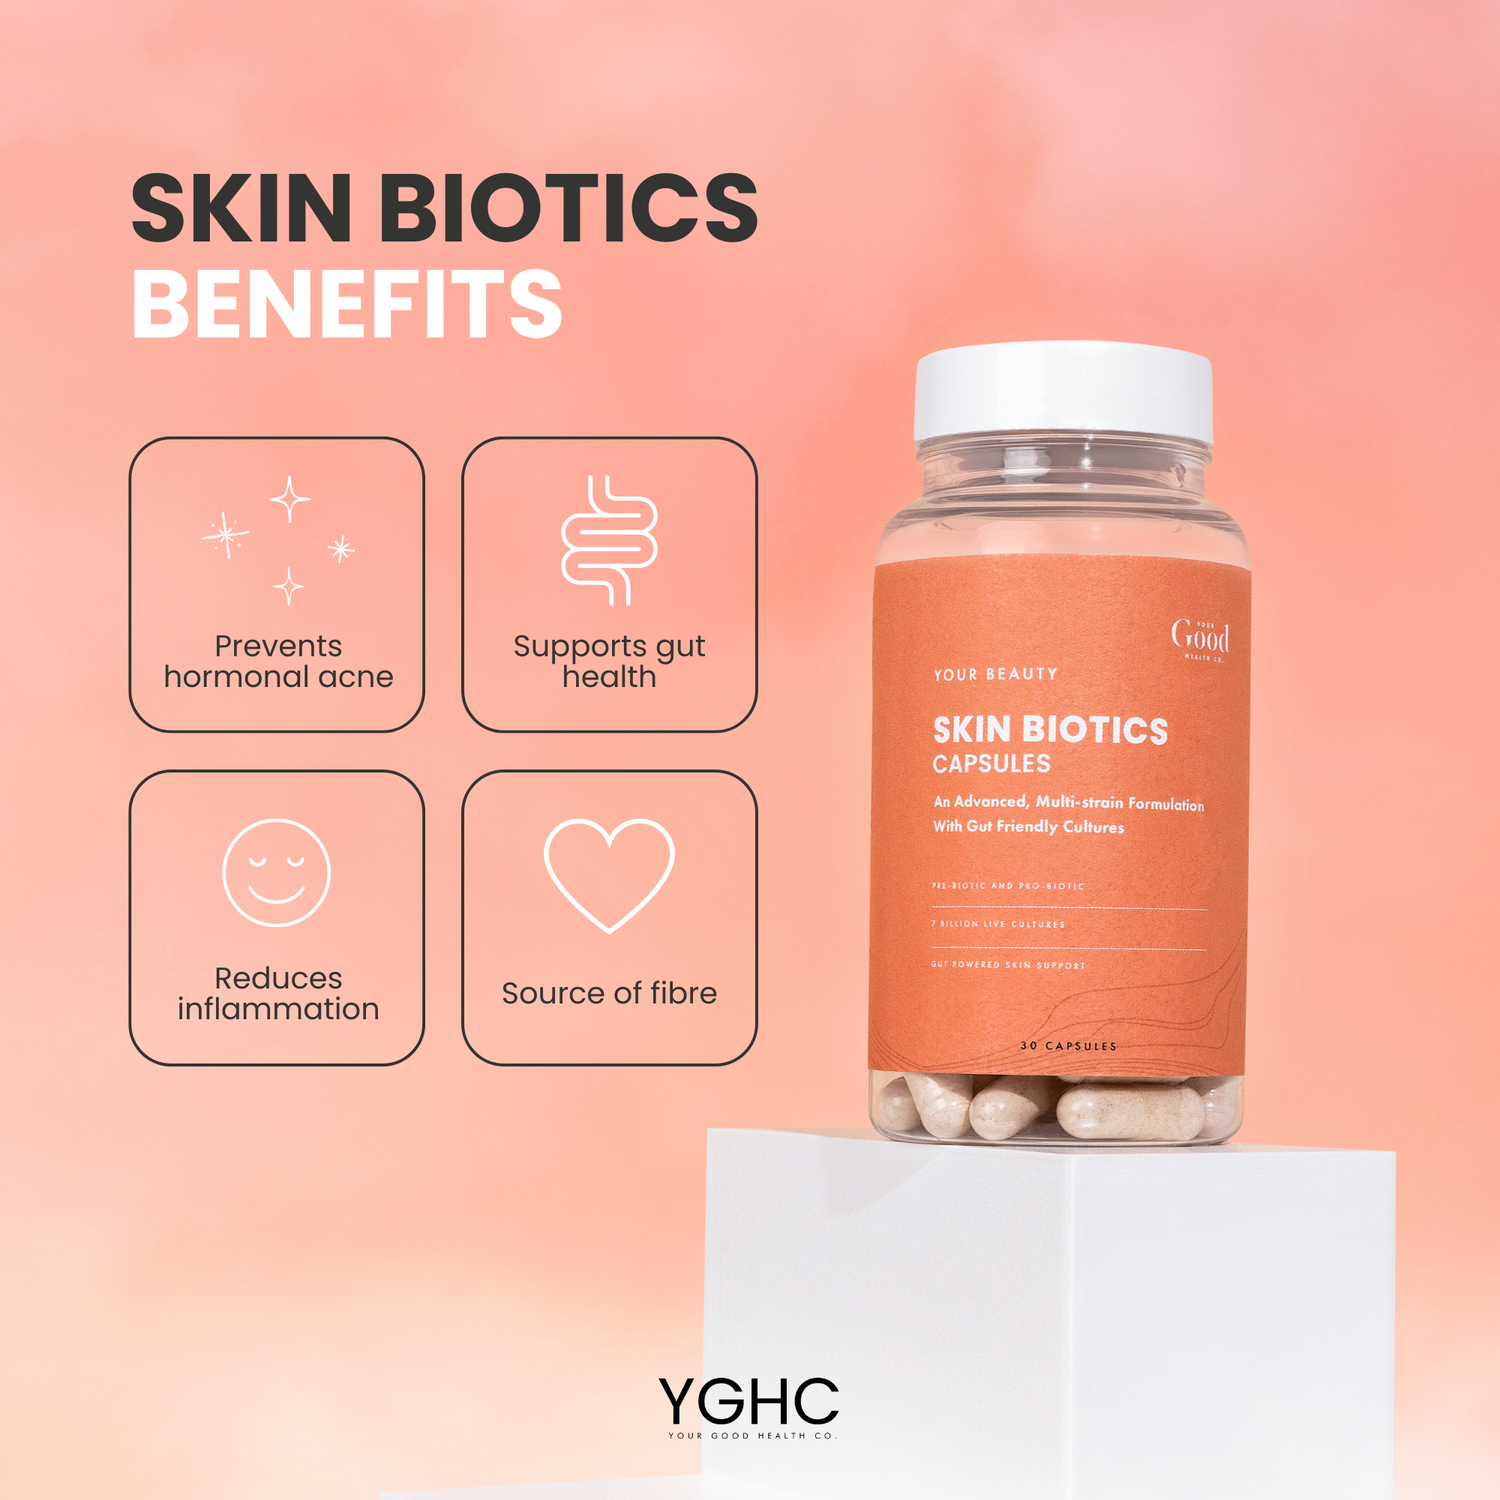 Skin Biotics